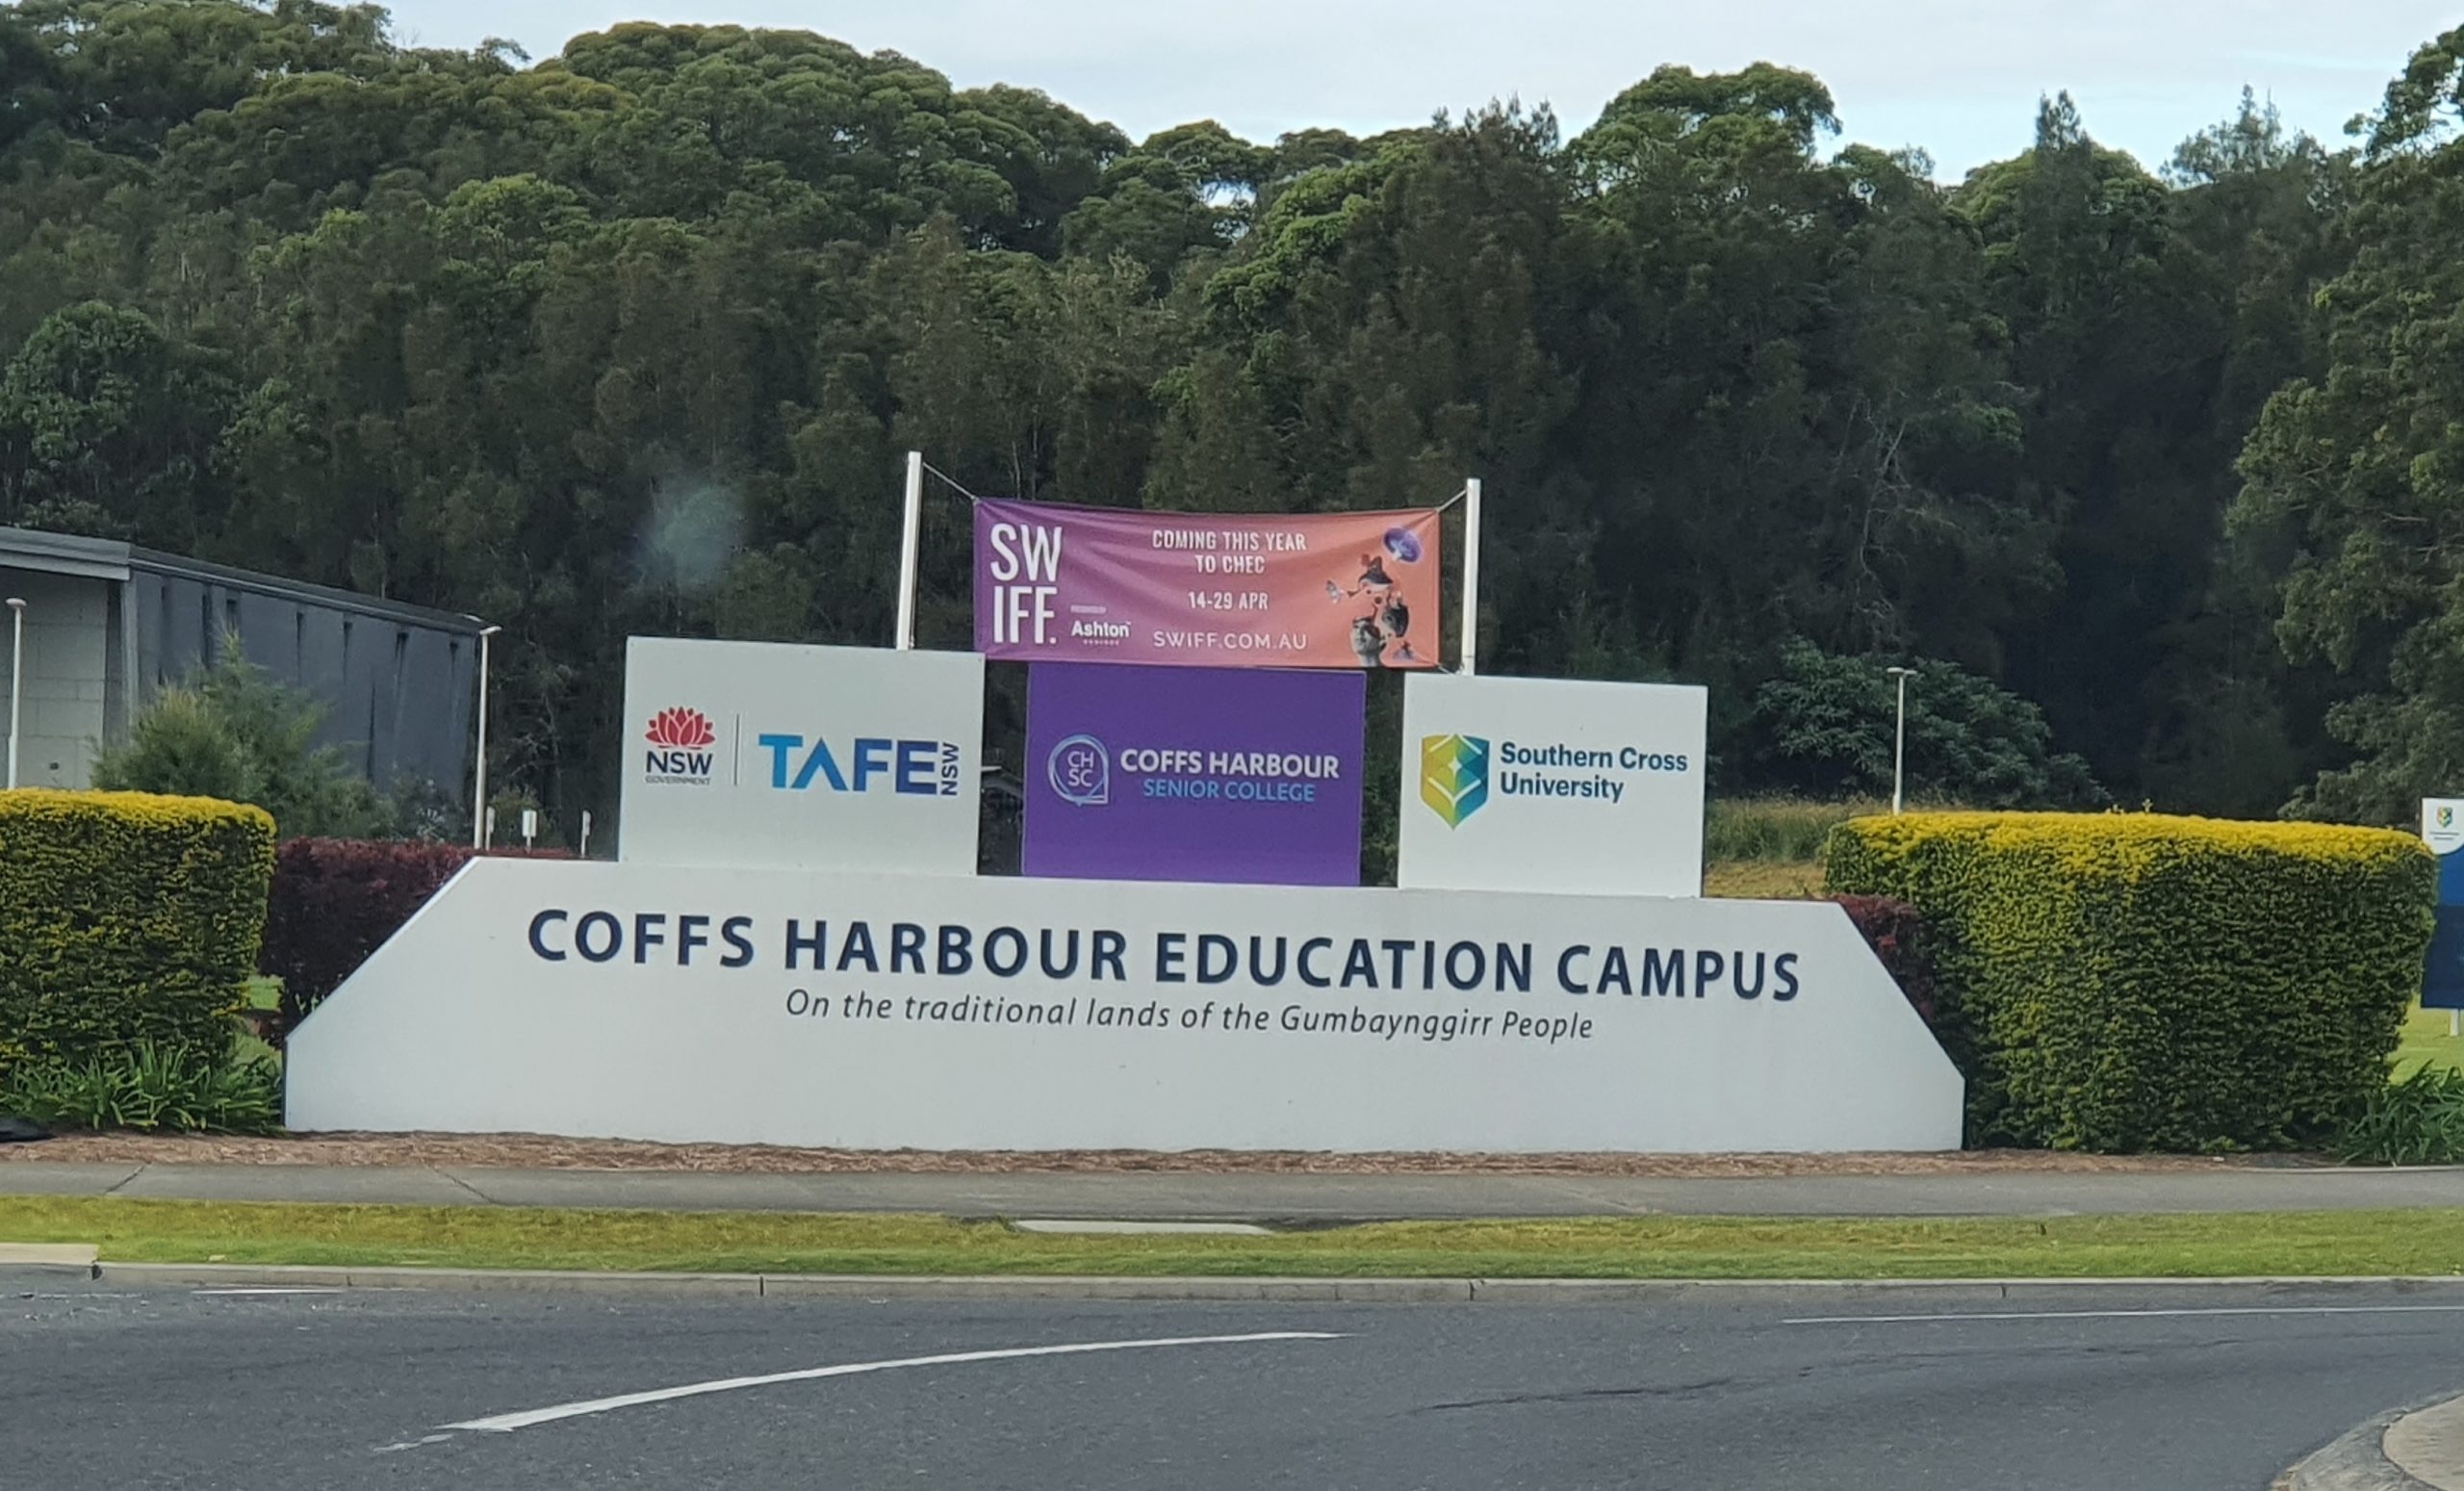 Case Study: Solving a parking access challenge for Coffs Harbour education campus